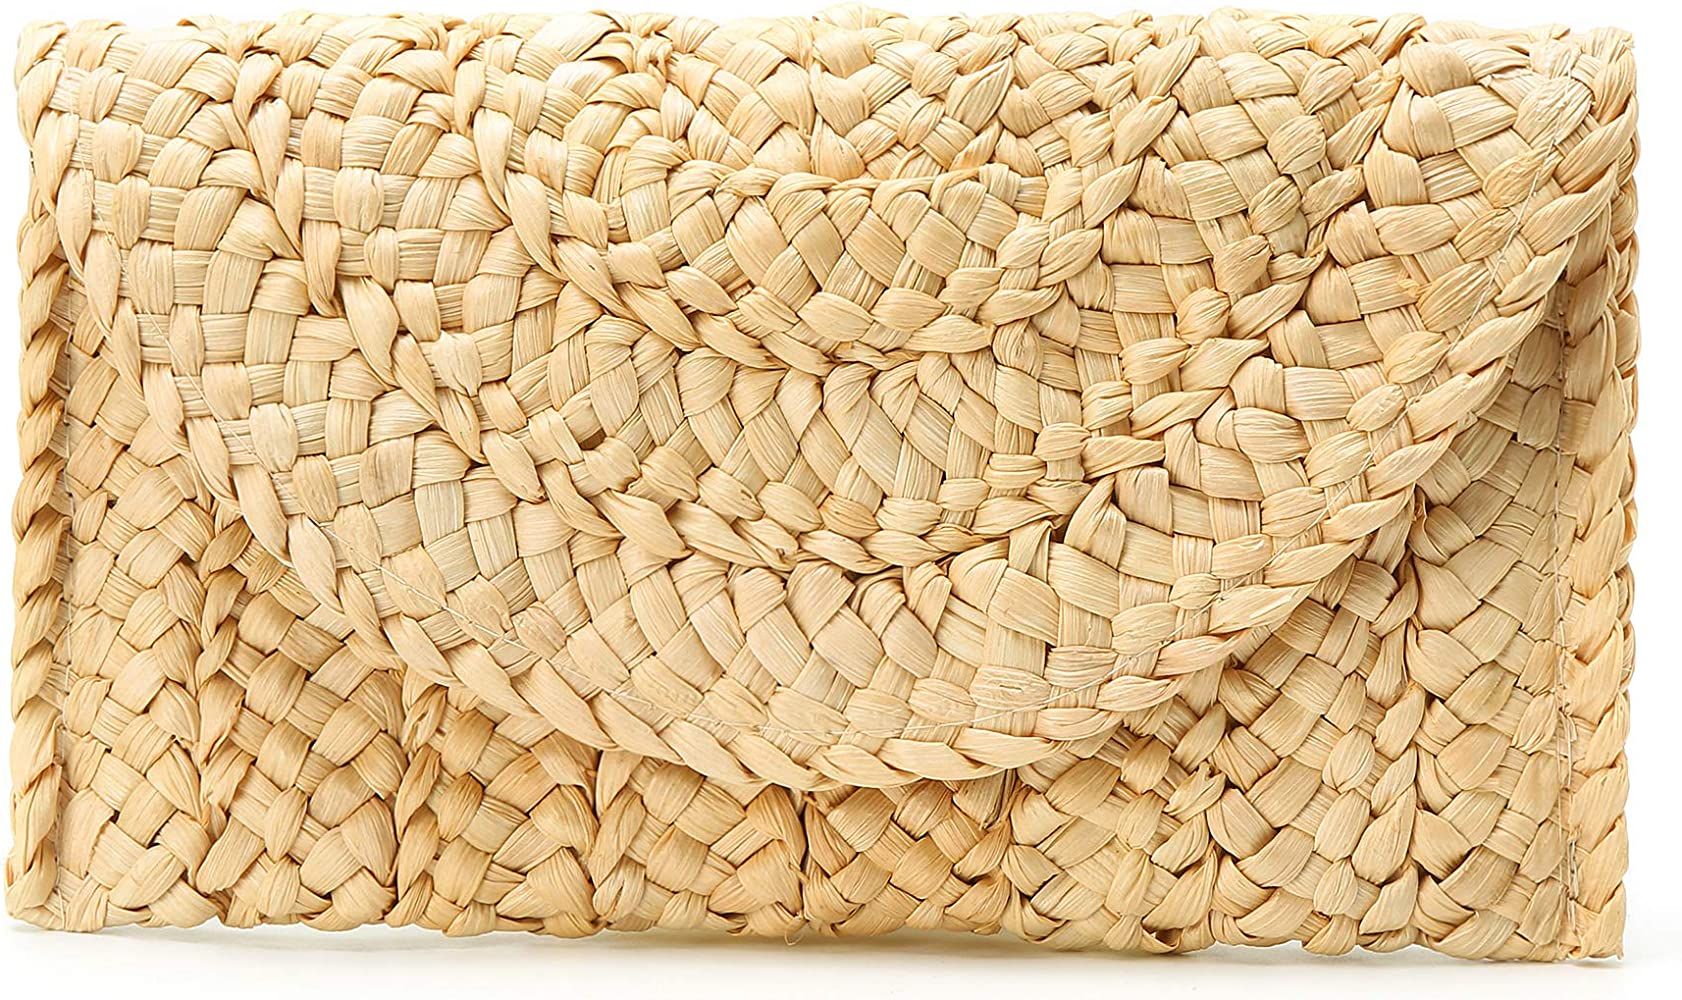 Women's Hand Wrist Straw Clutch Bag Bohemian Summer Beach Sea Purse and Handbag | Amazon (US)